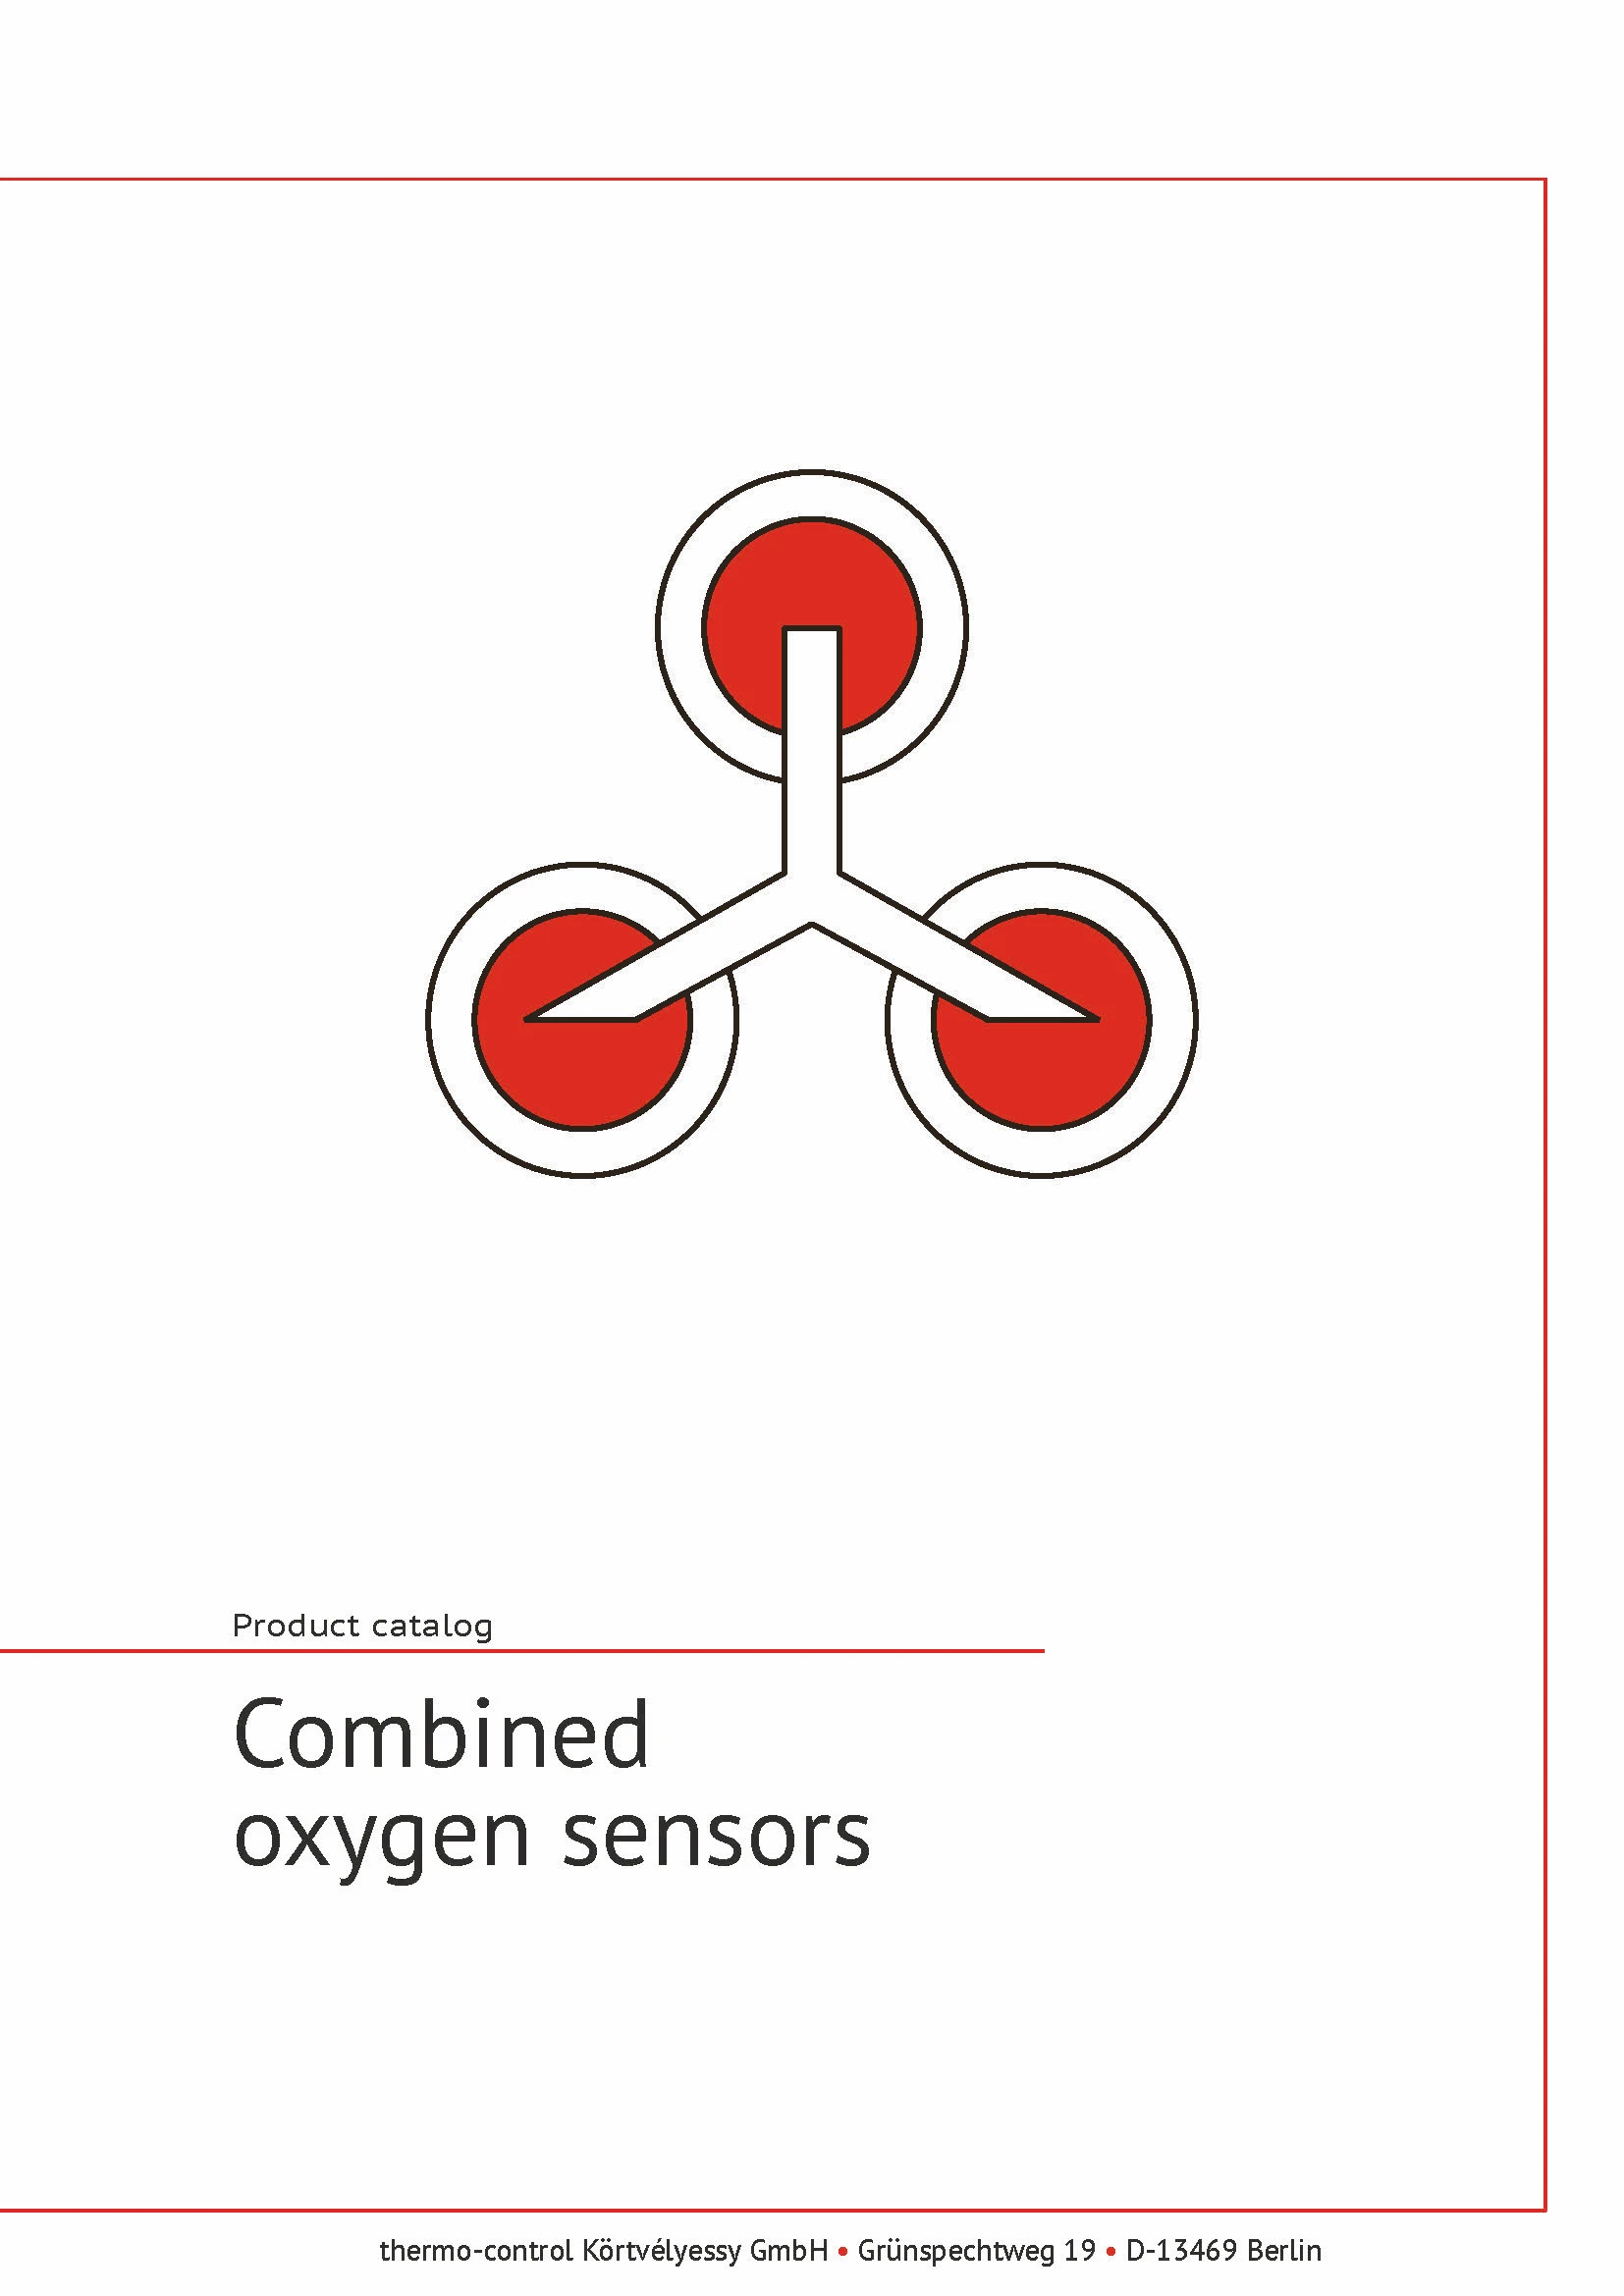 thermo-control Körtvélyessy - General catalog oxygen probes